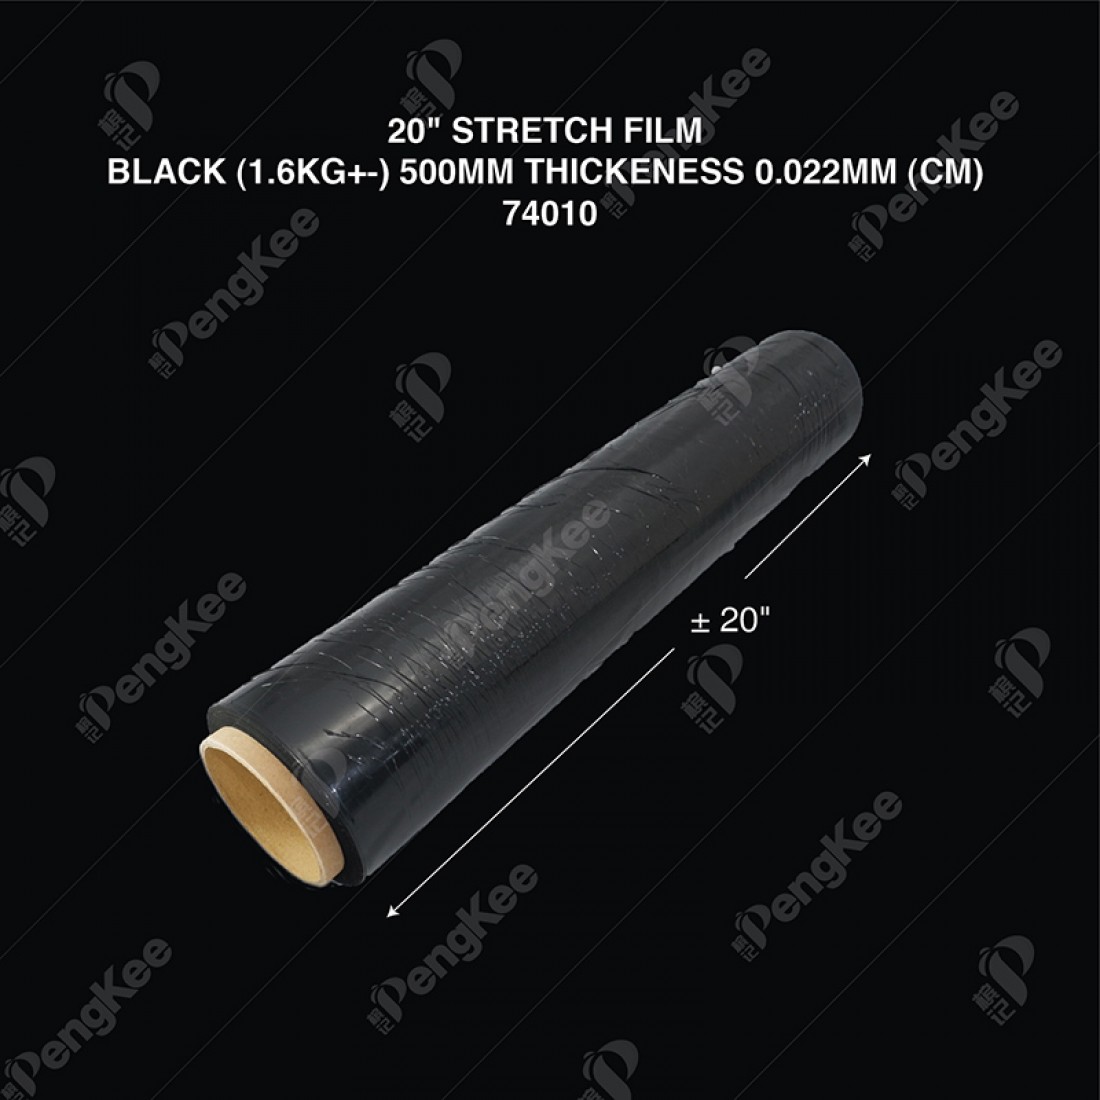 20" STRETCH FILM - BLACK (1.6KG+-) 500MM THICKENESS 0.022MM (CM) (6 ROLL/CTN)